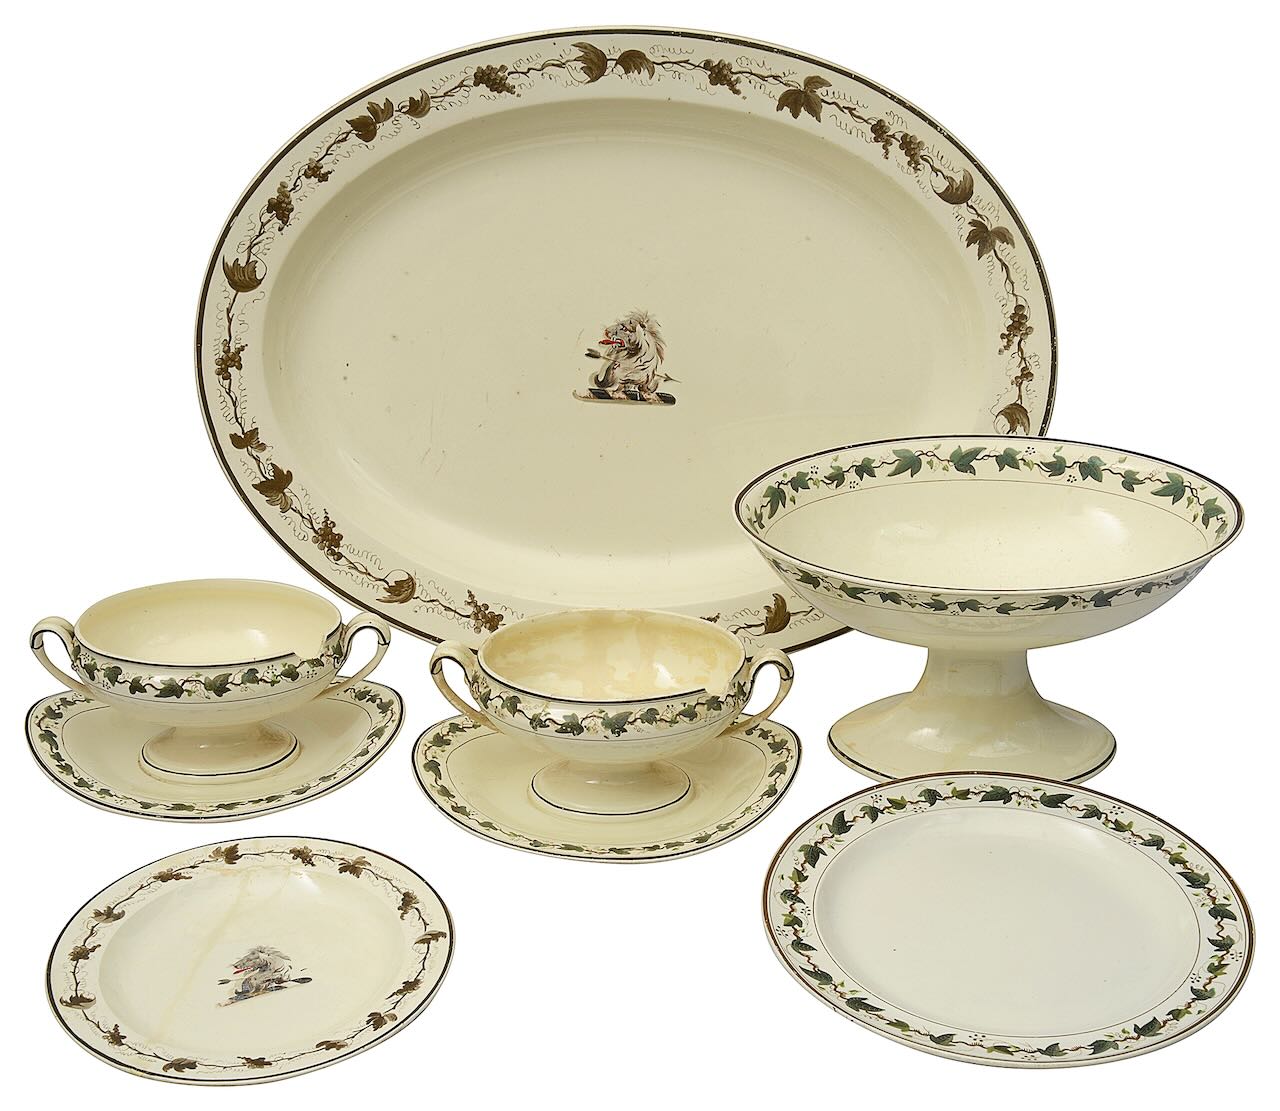 Early 19th century Wedgwood creamware